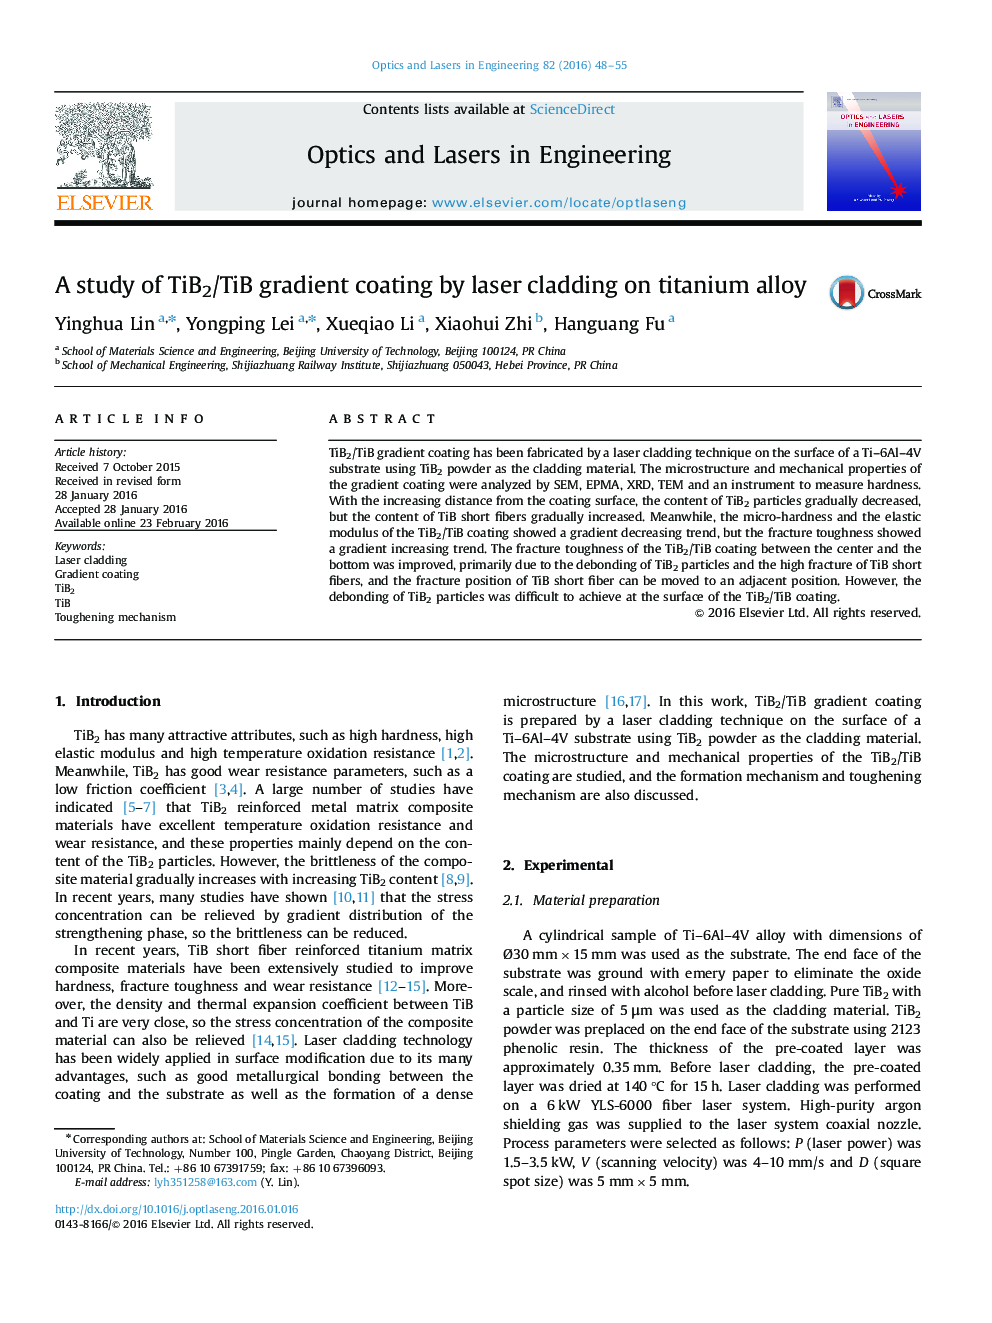 A study of TiB2/TiB gradient coating by laser cladding on titanium alloy